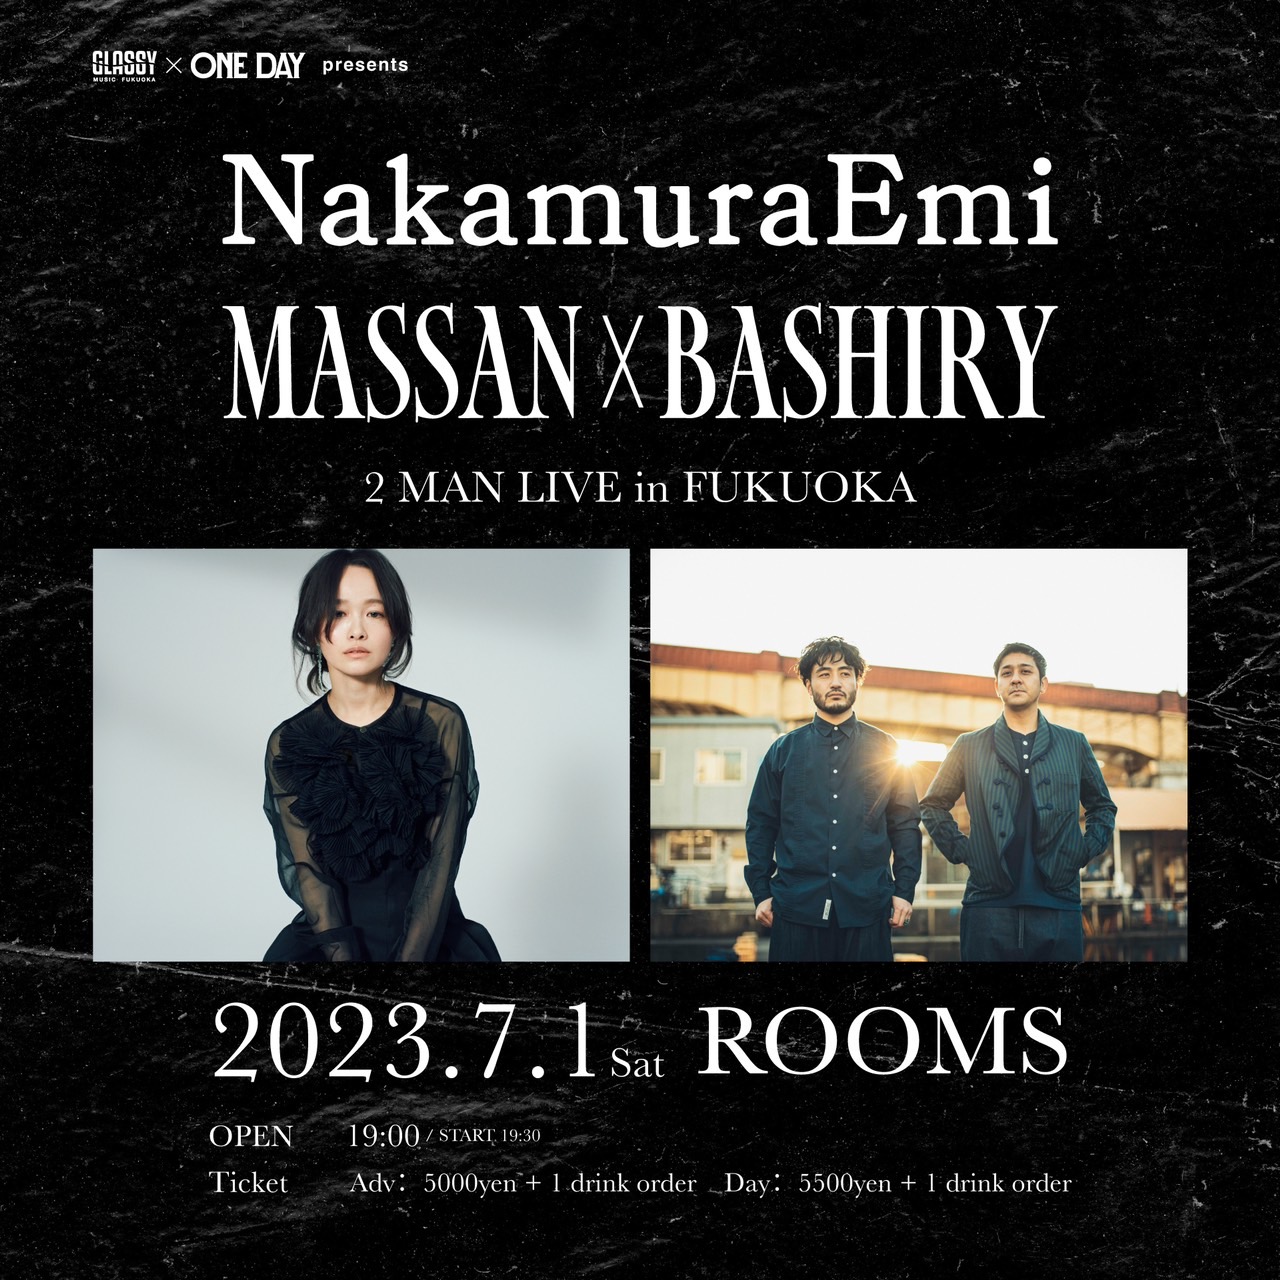 「NakamuraEmi ／MASSAN×BASHIRY」 2 MAN LIVE in Fukuoka